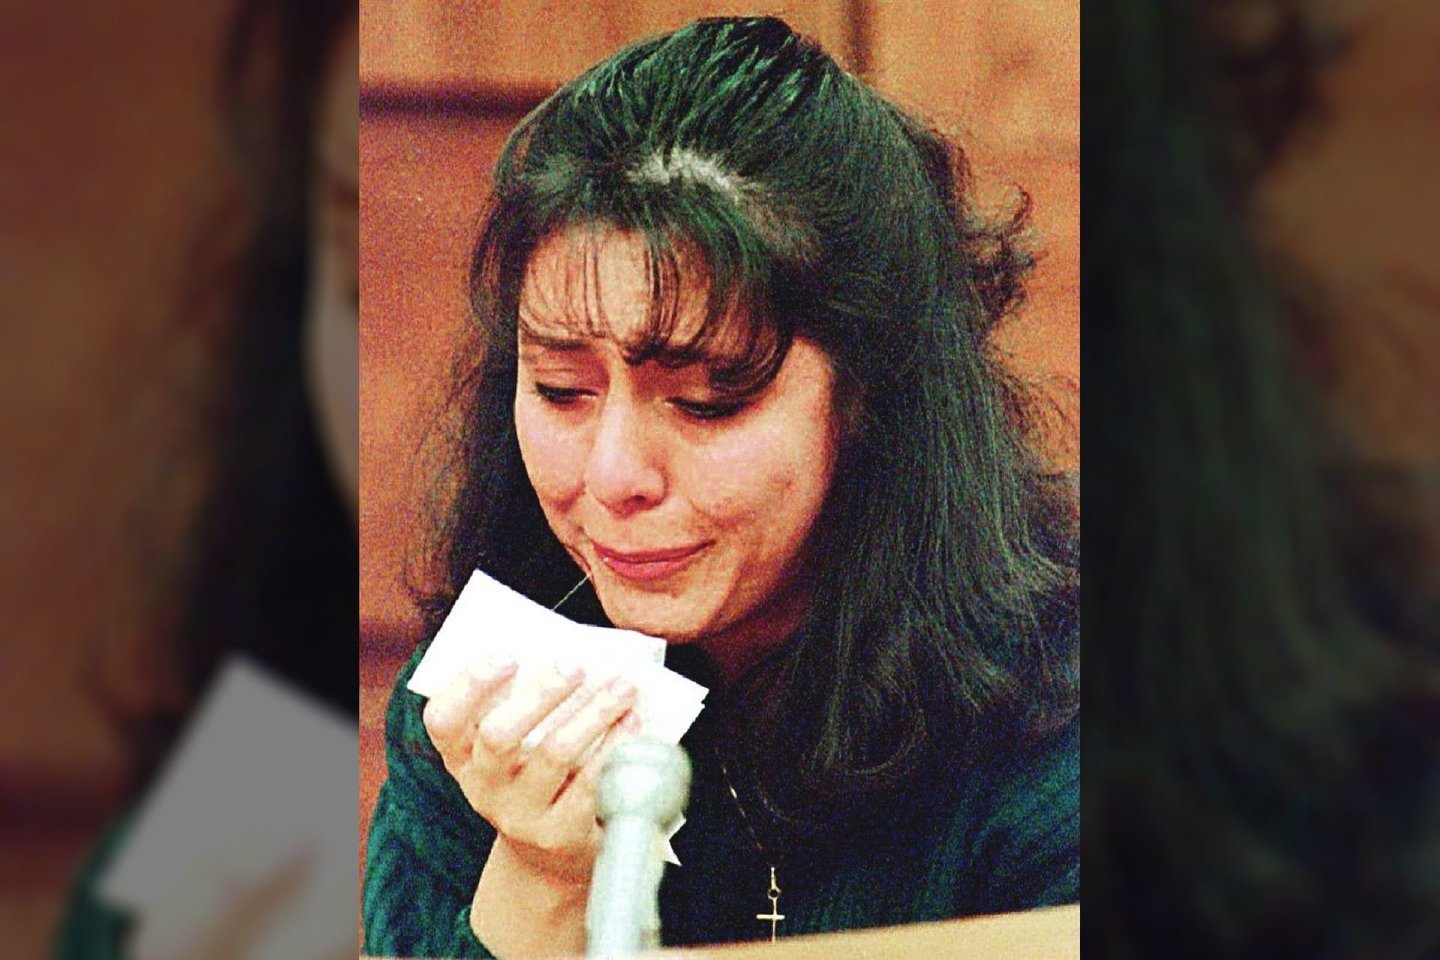  L.Bobbitt 1994-aisiais teisme verkė. <br> „Scanpix” nuotr. 